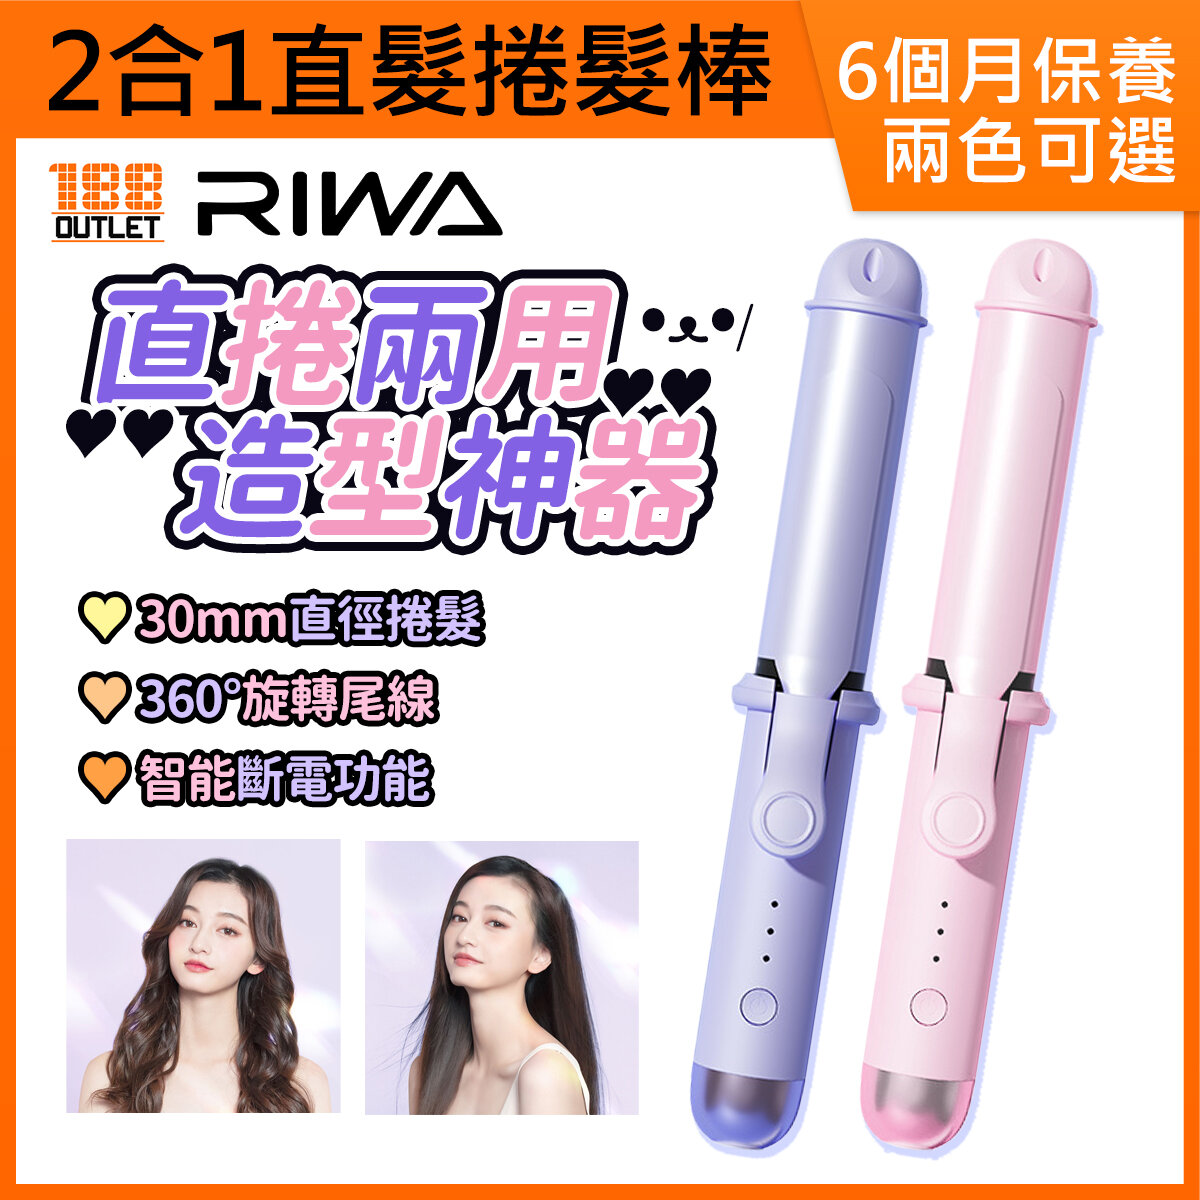 RIWA雷瓦 兩用迷你直髮夾/捲髮棒 RB8125 紫色 [平行進口]